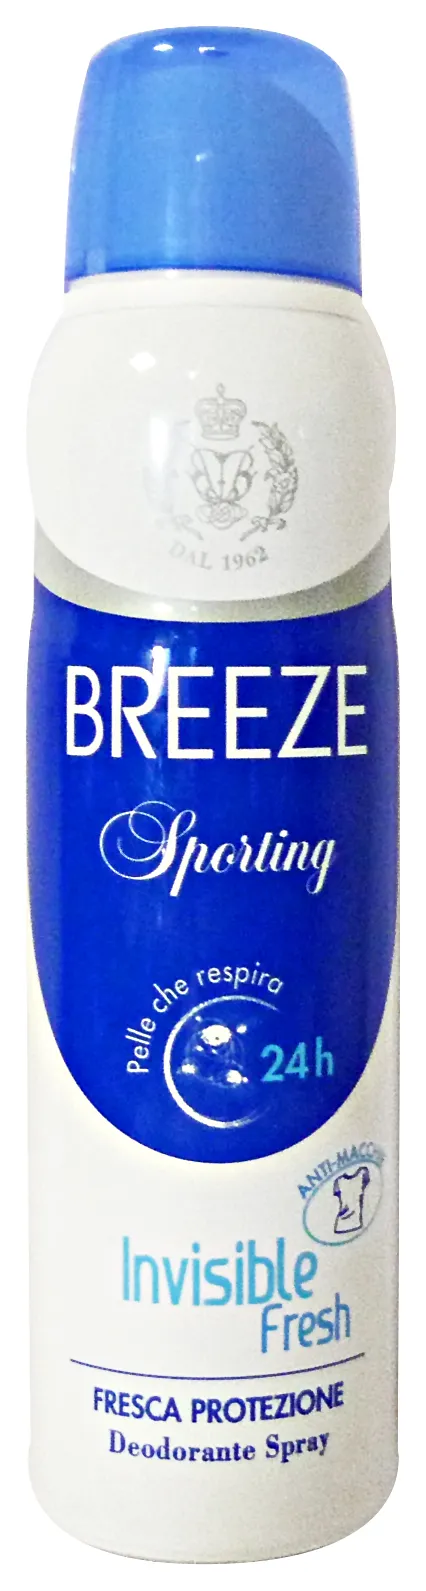 "BREEZE Dedorante spray Sporting 150 ml - Deodorante Maschile"